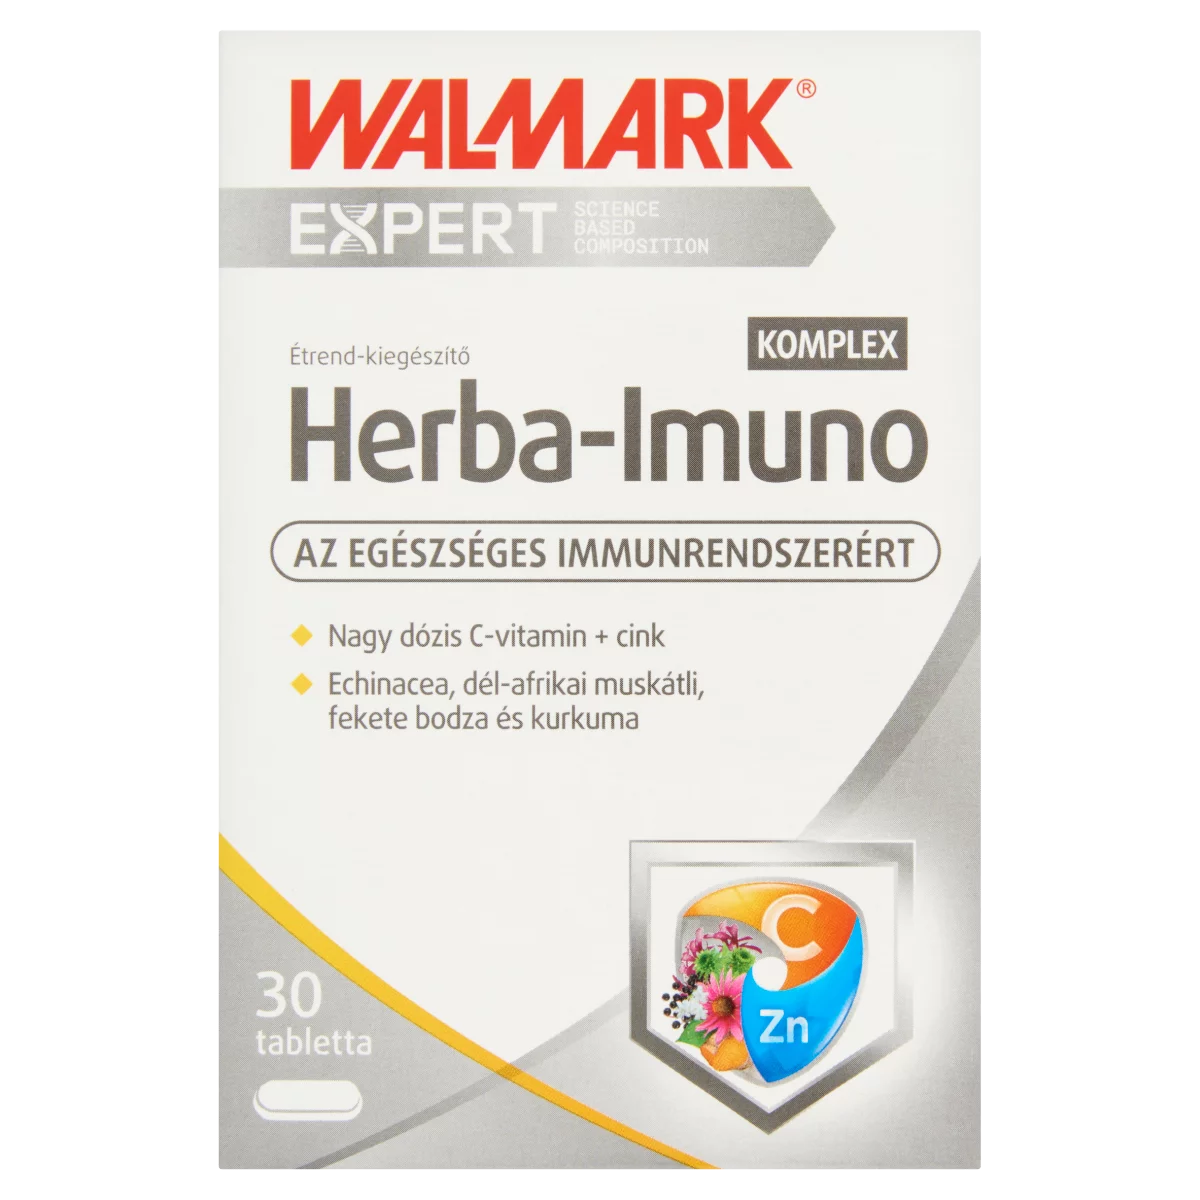 Walmark Herba-Imuno Komplex étrend-kiegészítő tabletta 30 db